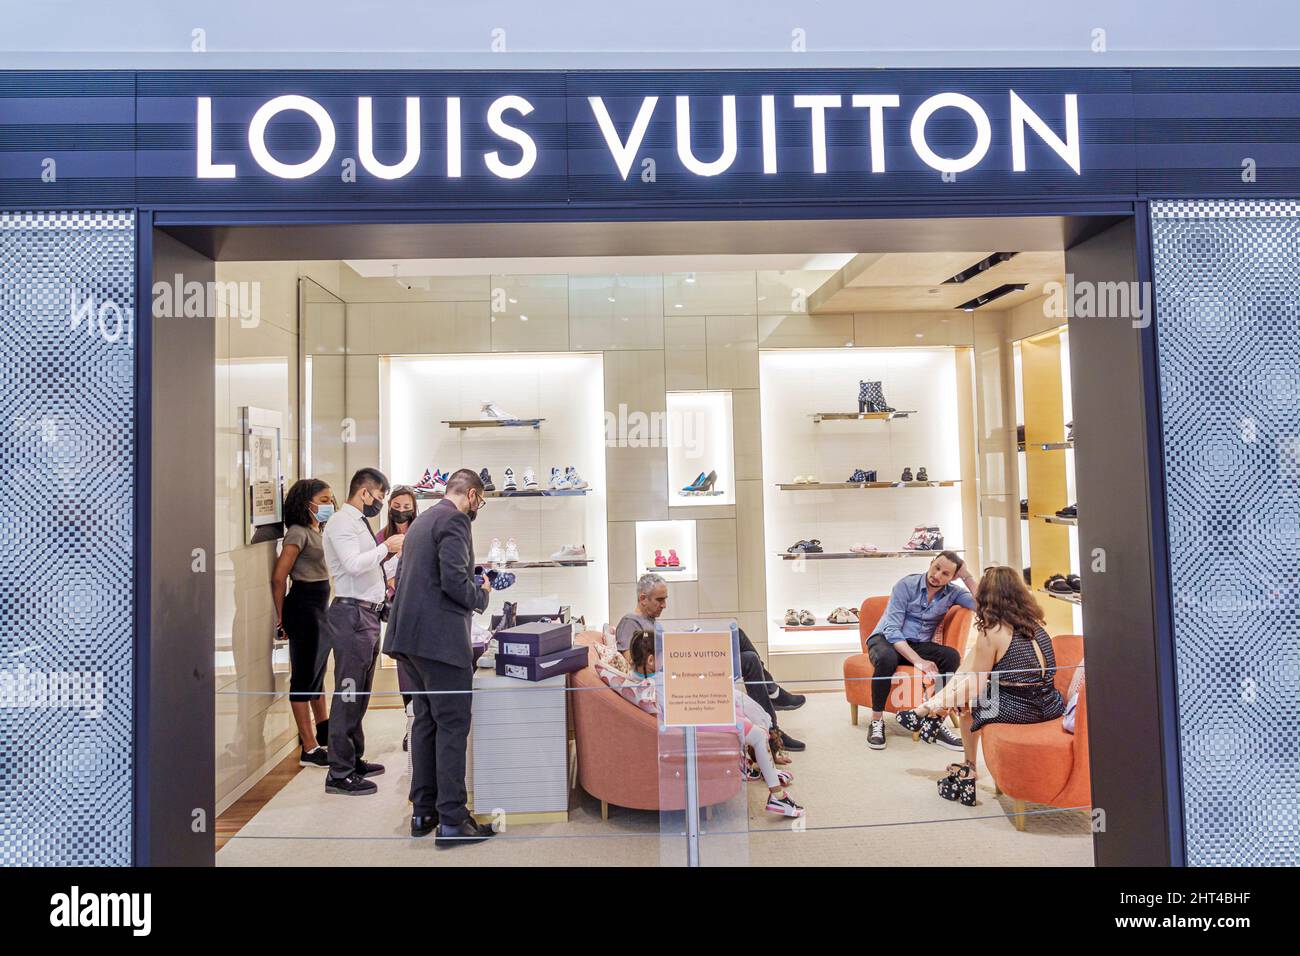 Louis Vuitton Retail Store Facade Front Entrance Fifth Avenue, NYC, USA  Stock Photo - Alamy